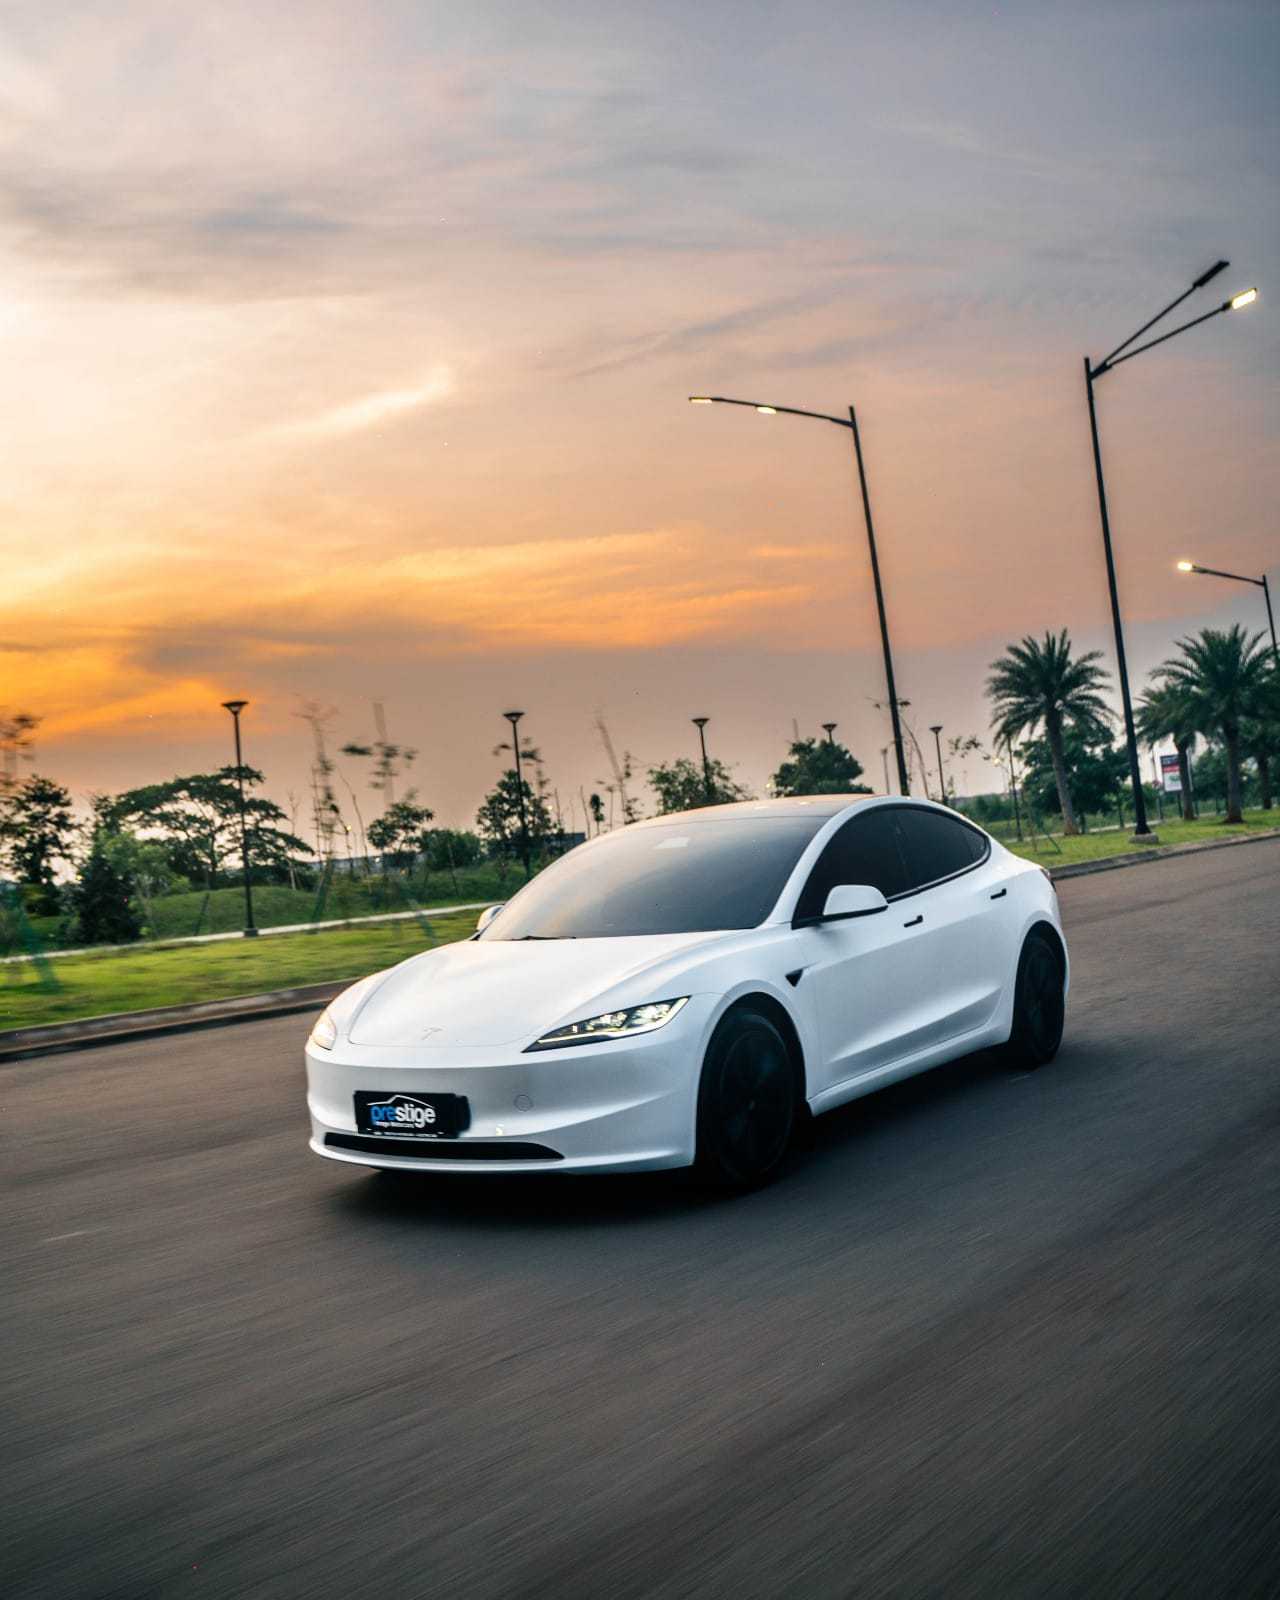 Bawa Kesegaran Baru pada Lini Tesla di Indonesia, Prestige Motorcars Perkenalkan New Tesla Model 3 Highland